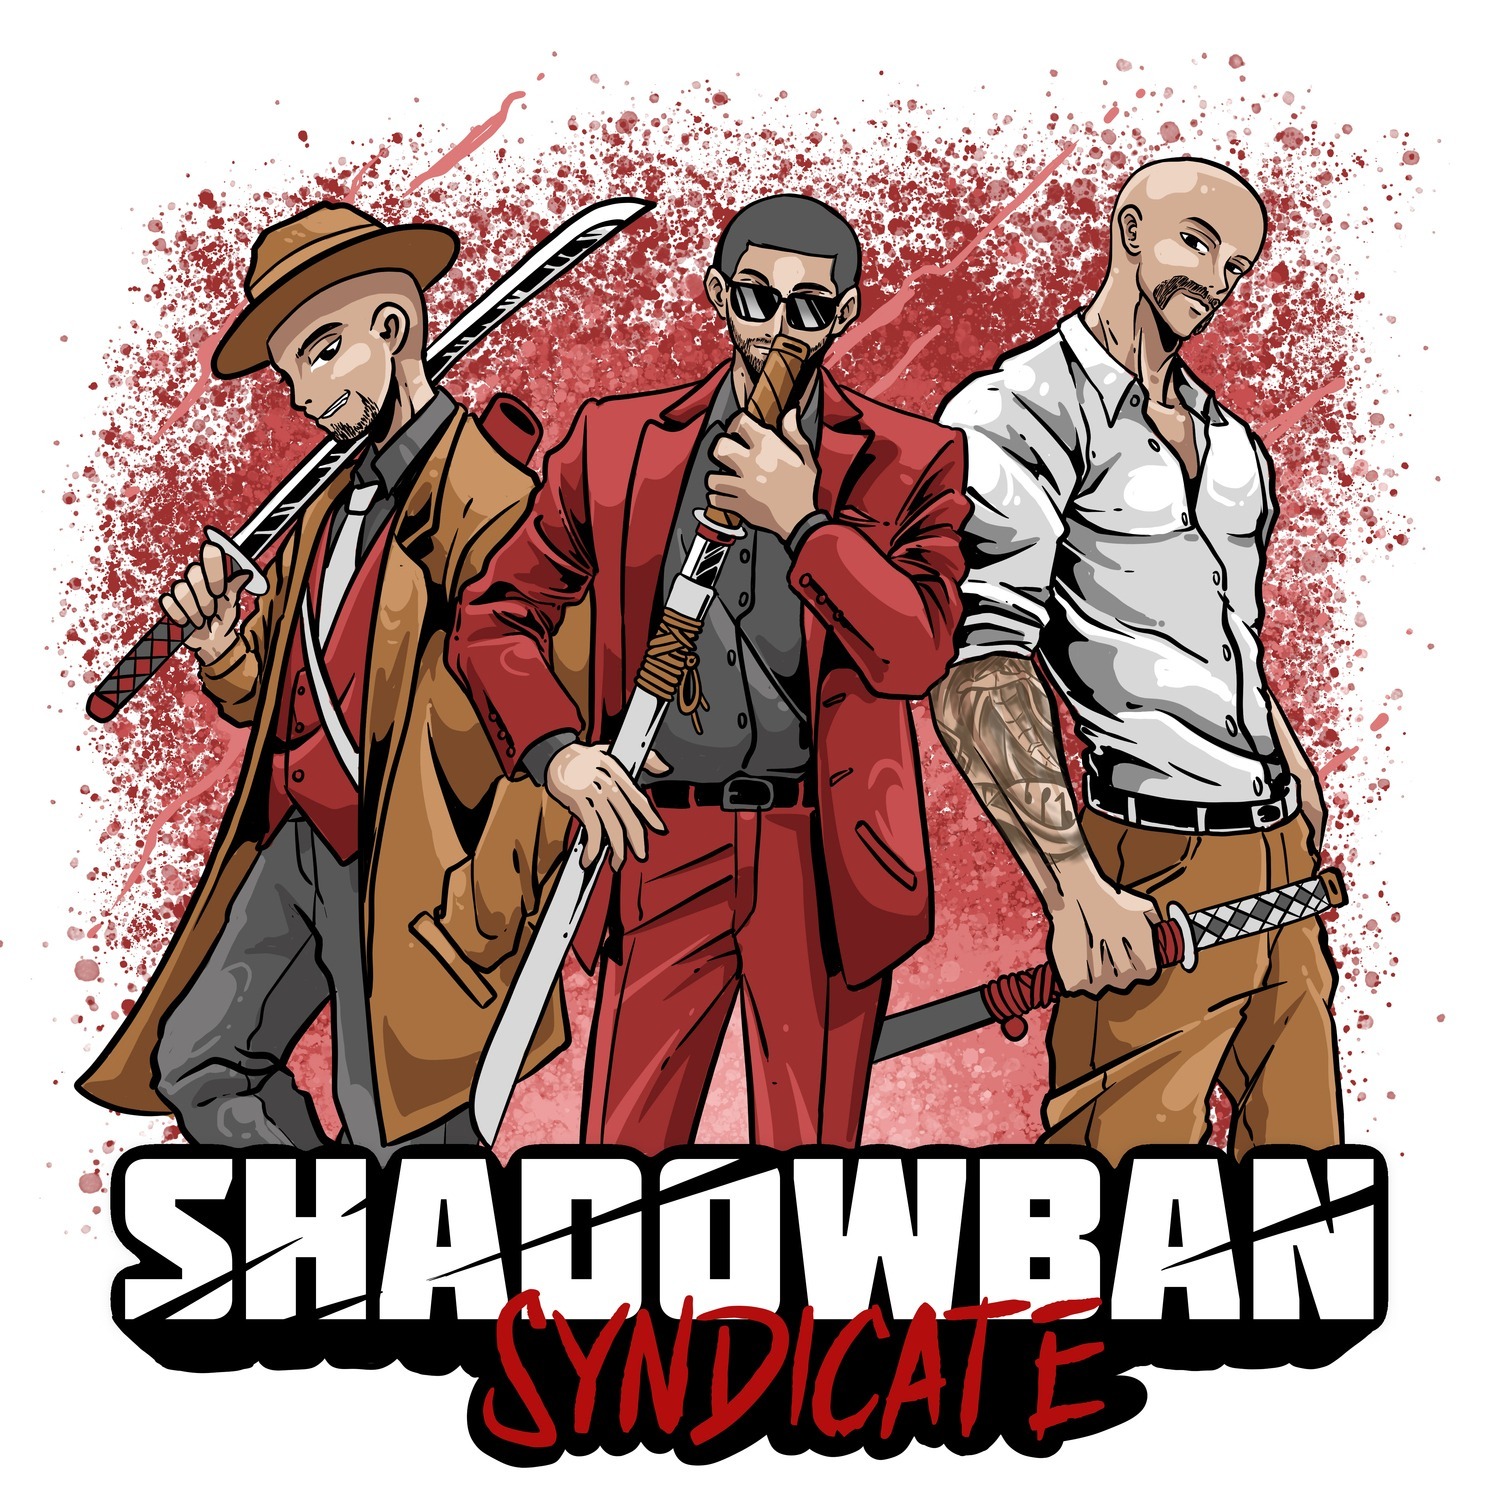 Shadowban Syndicate #6: 